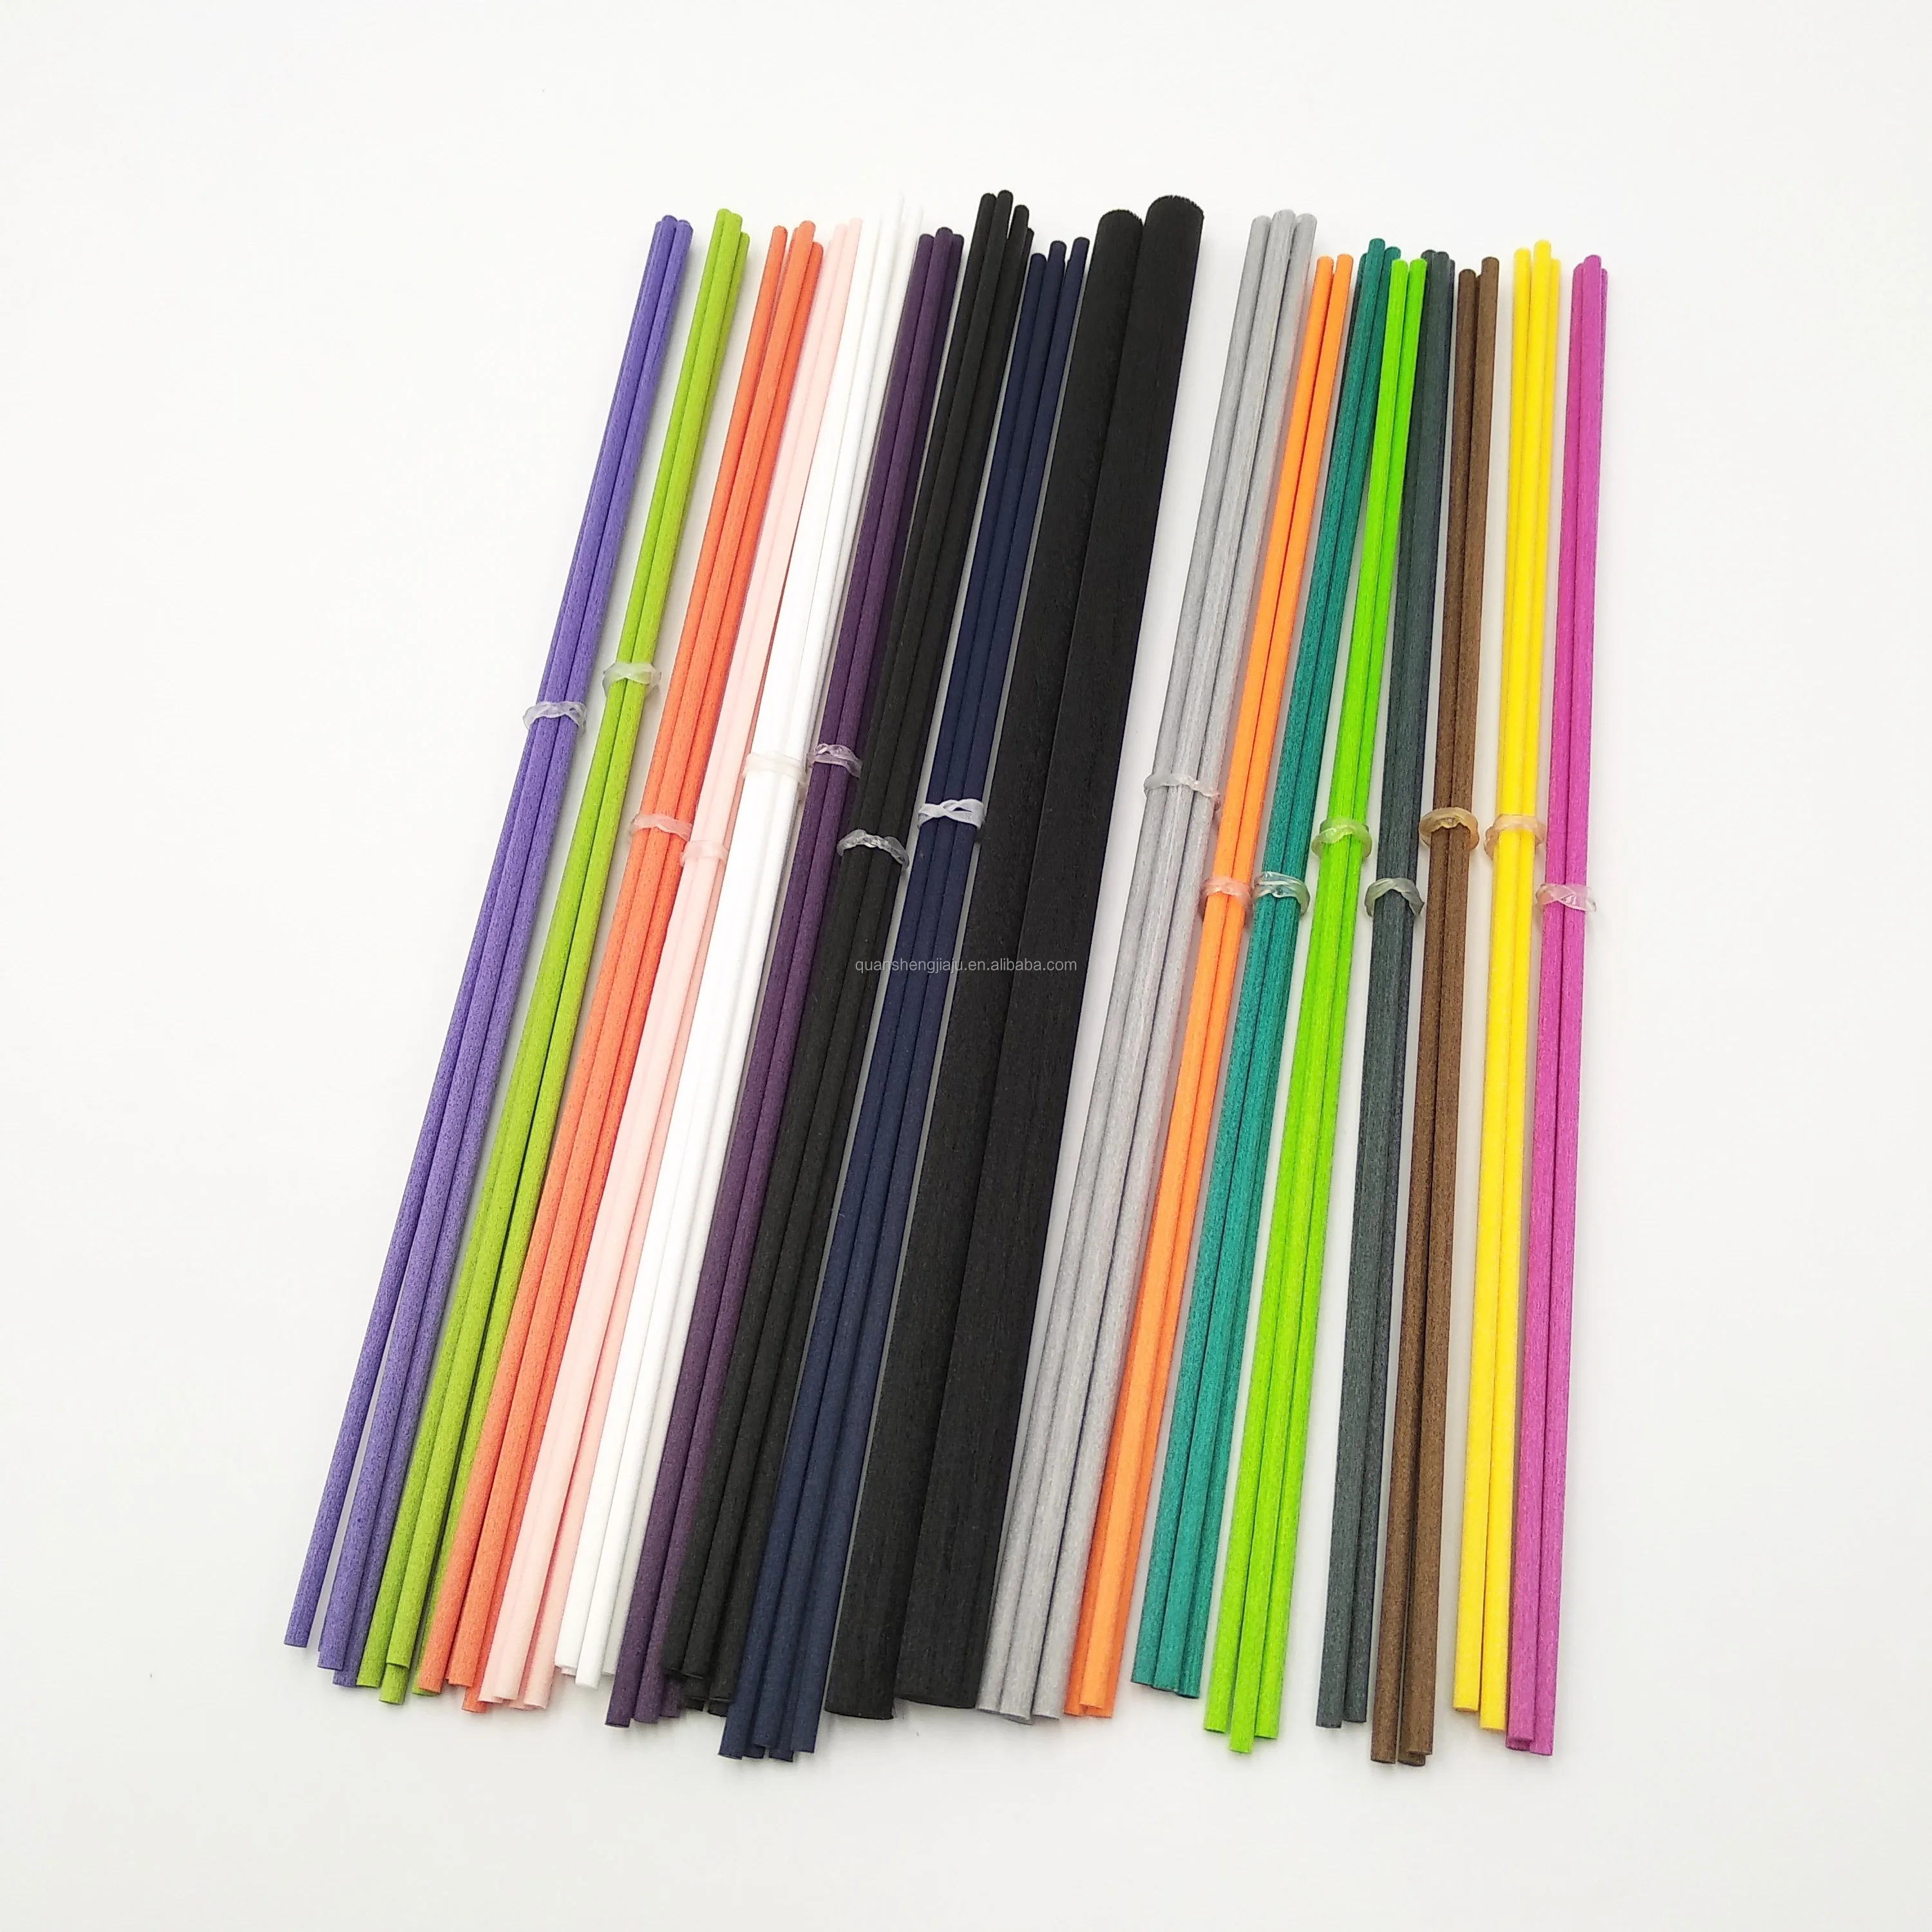 
3mm Black Synthetic Diffuser Sticks Fiber Reed Sticks 